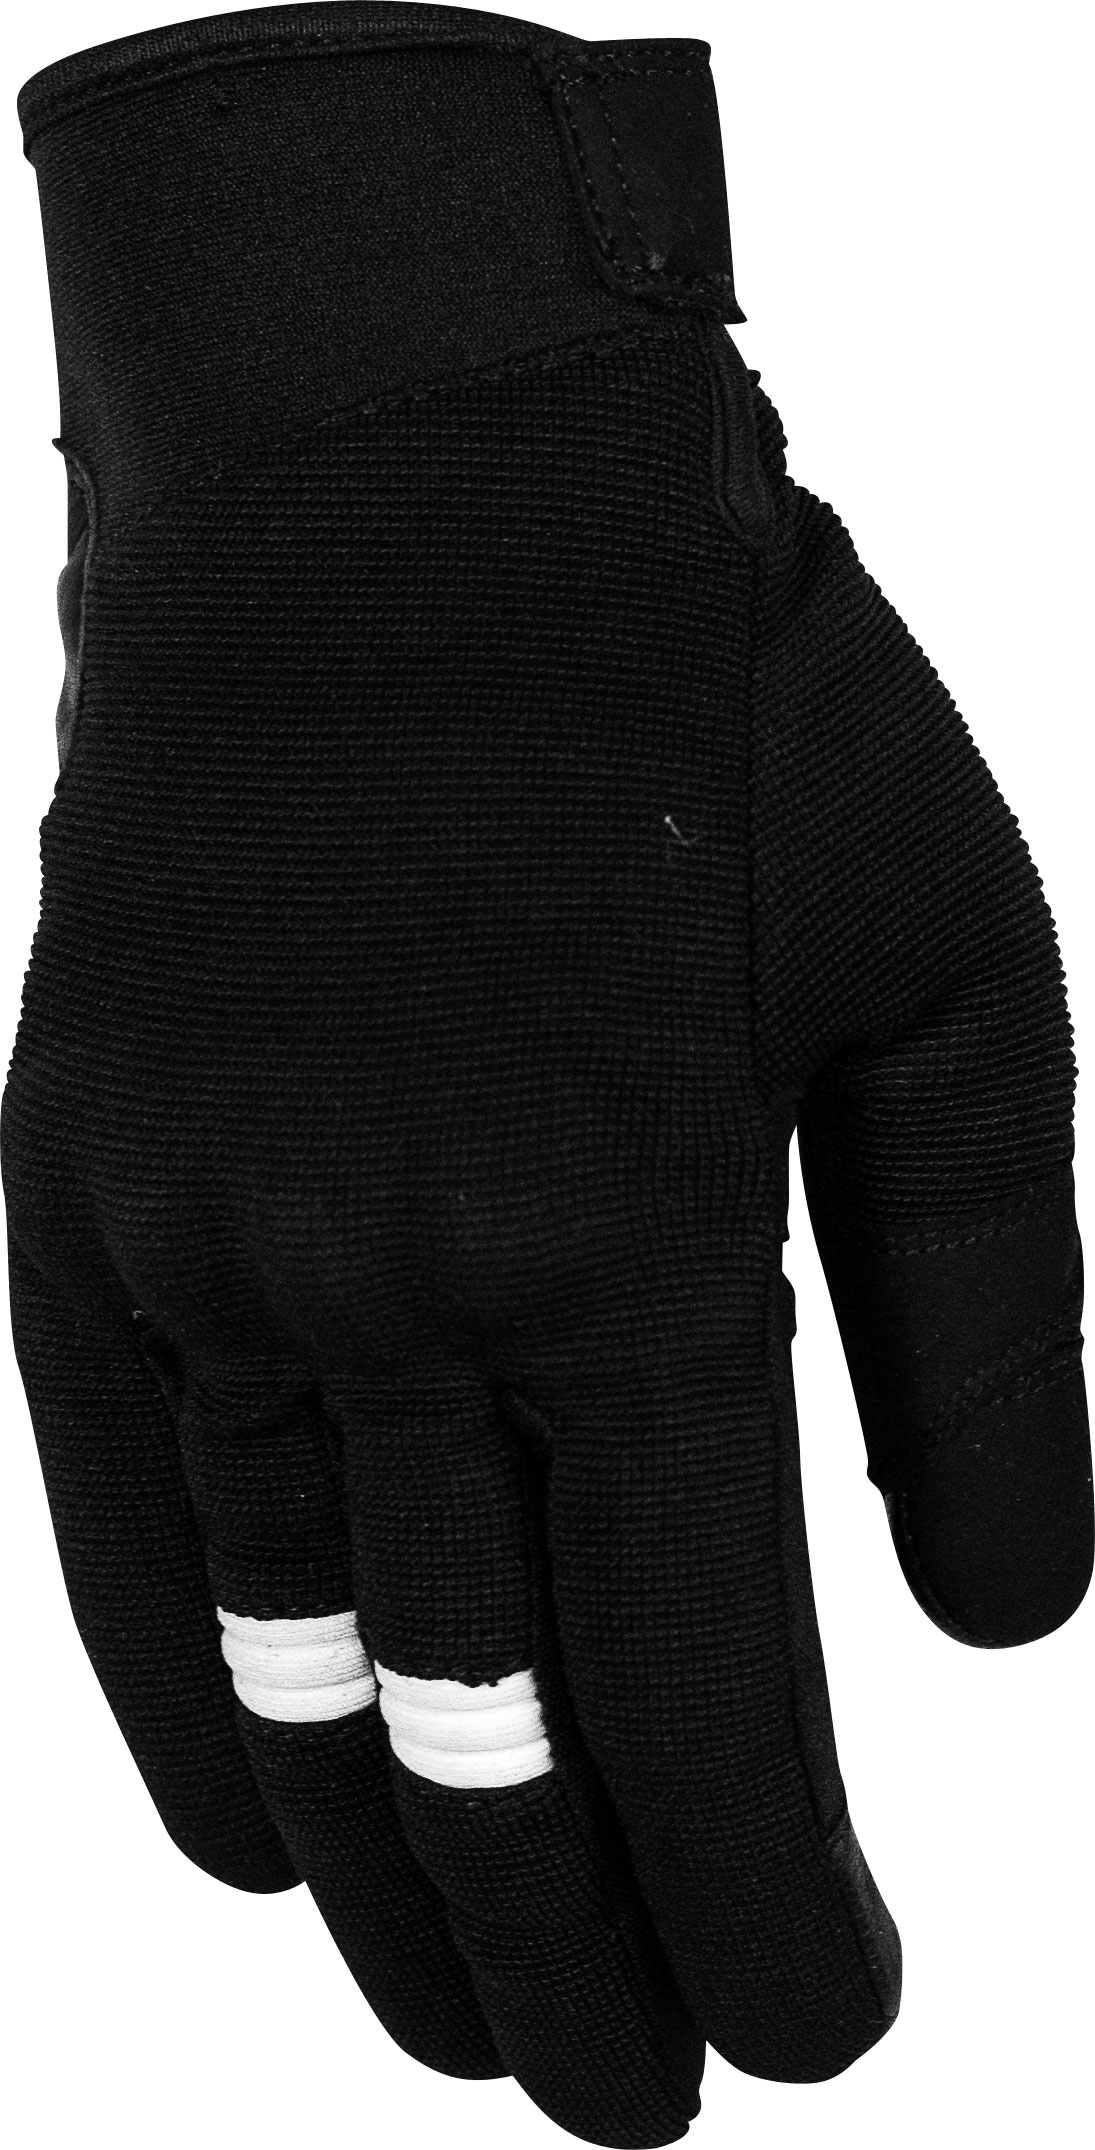 Rusty Stitches Bonnie V2, gants femmes - Noir/Blanc - M